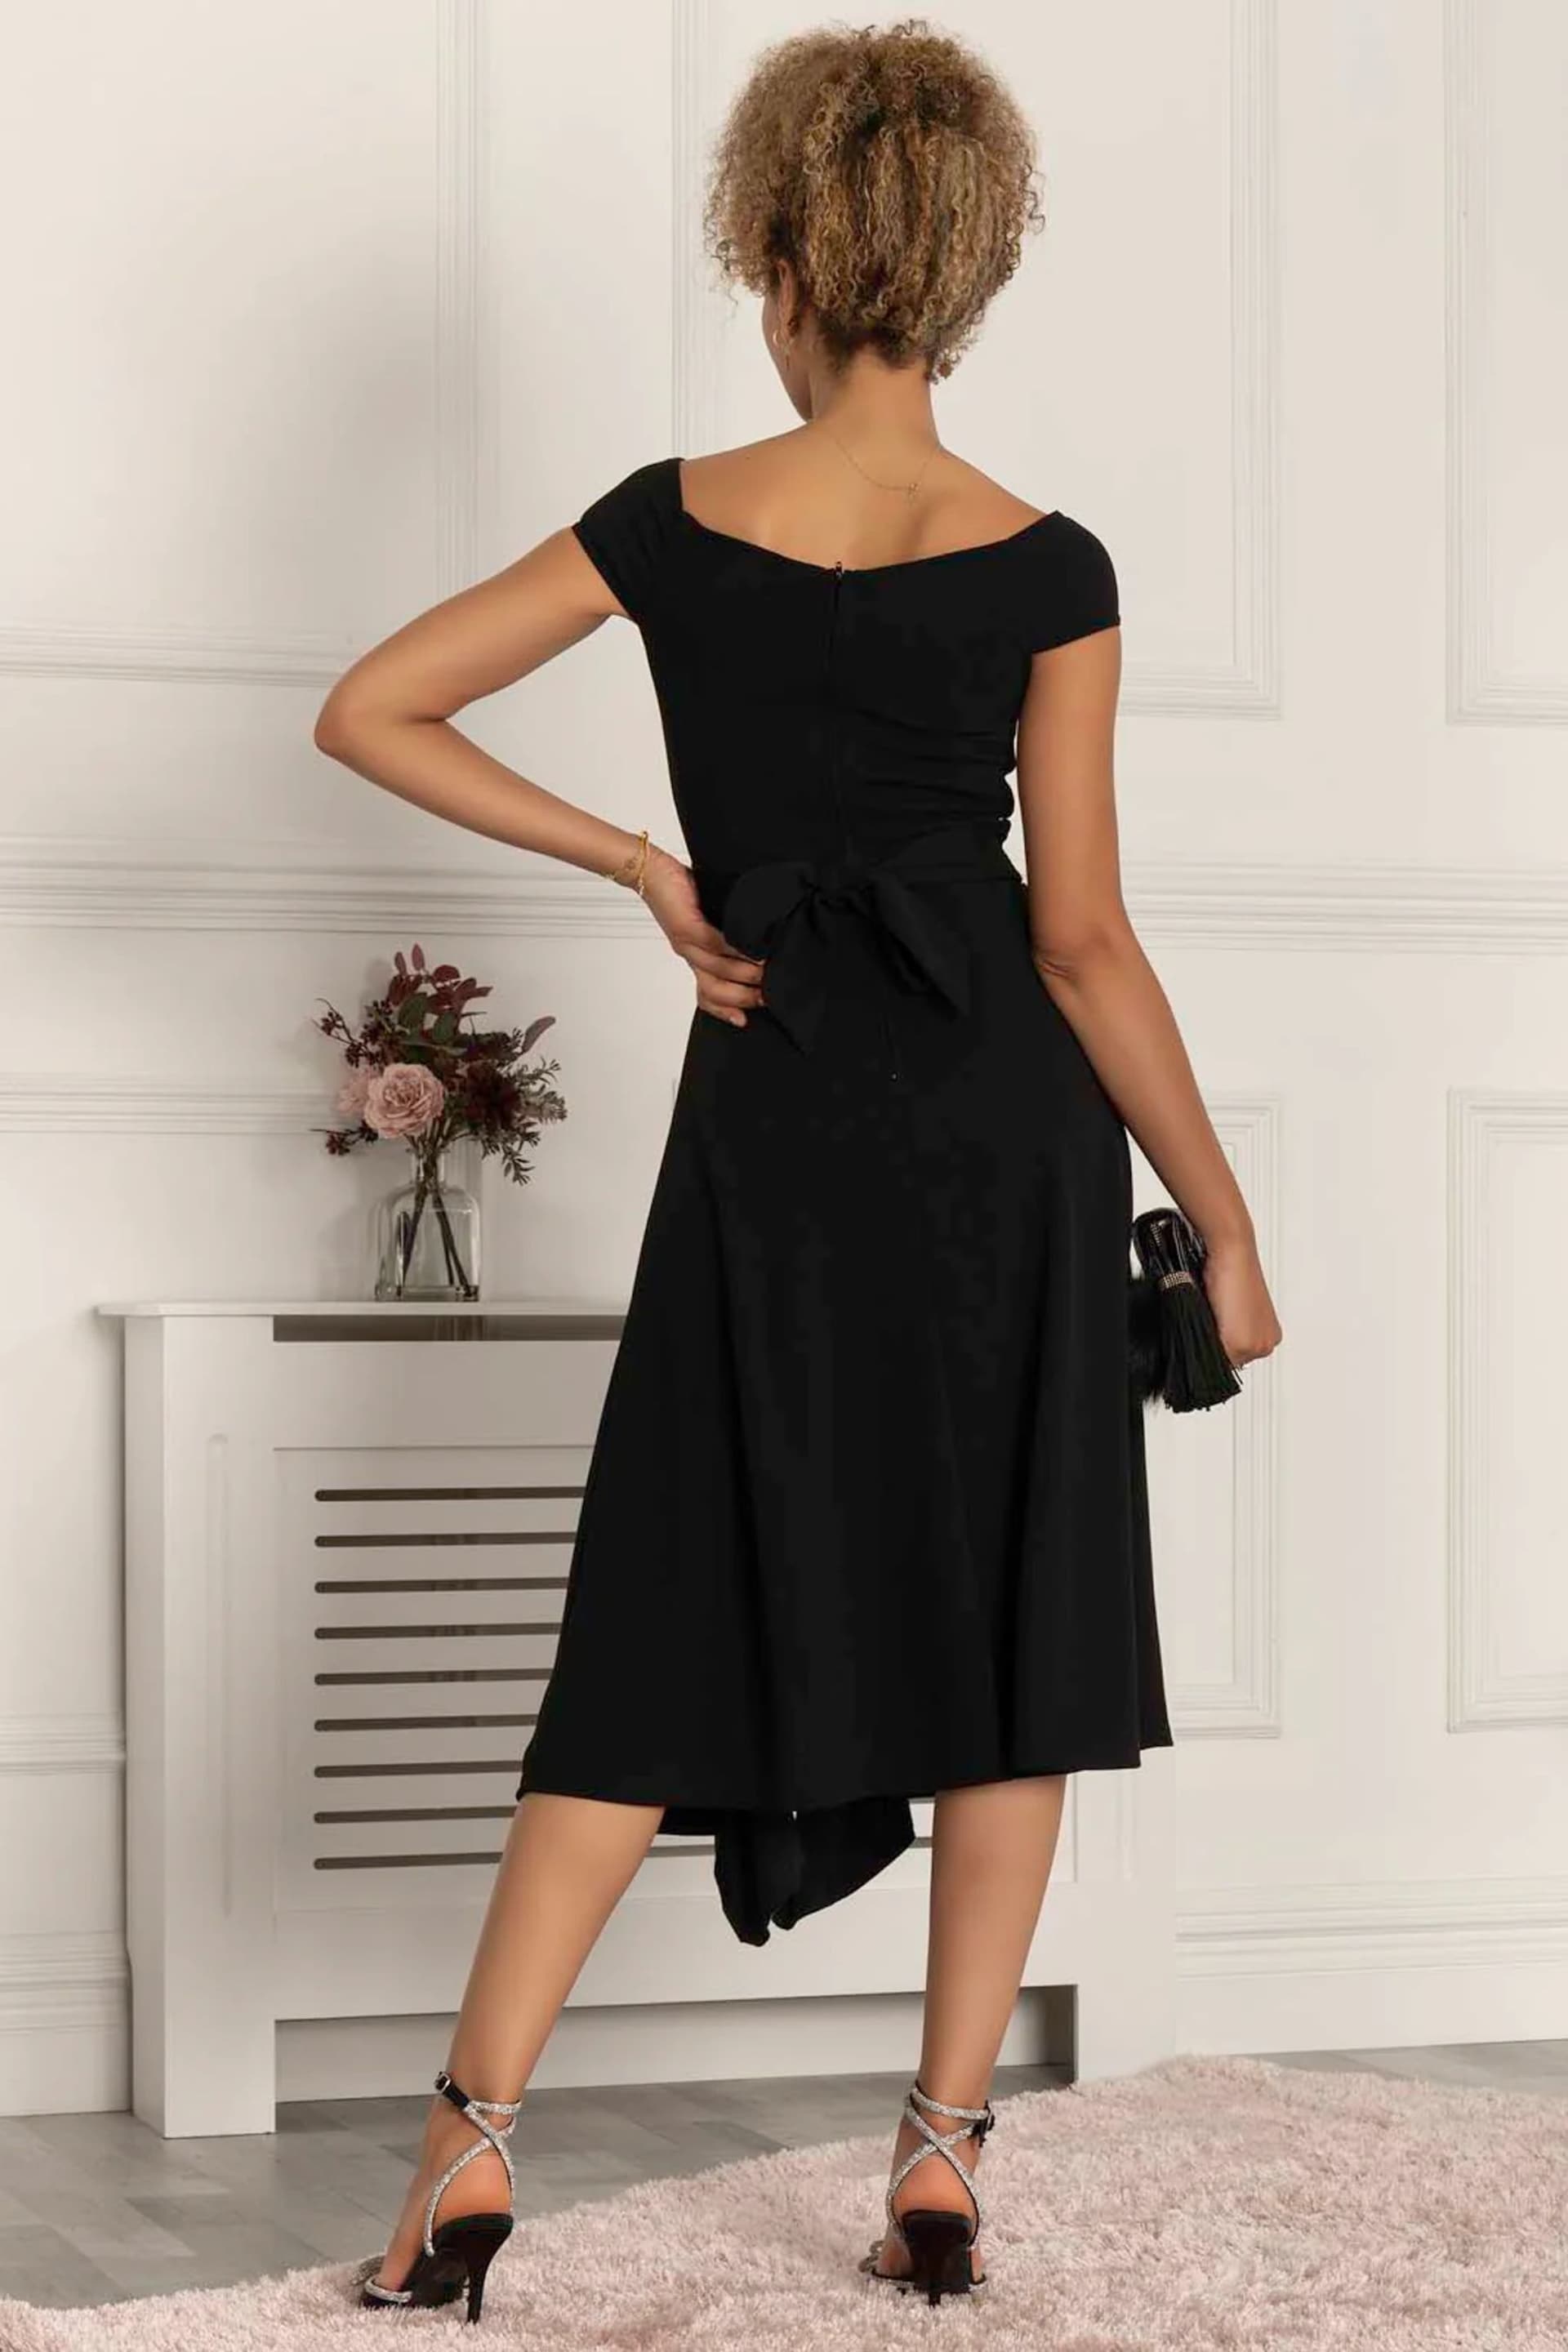 Jolie Moi Black Desiree Frill Fit & Flare Dress - Image 2 of 7